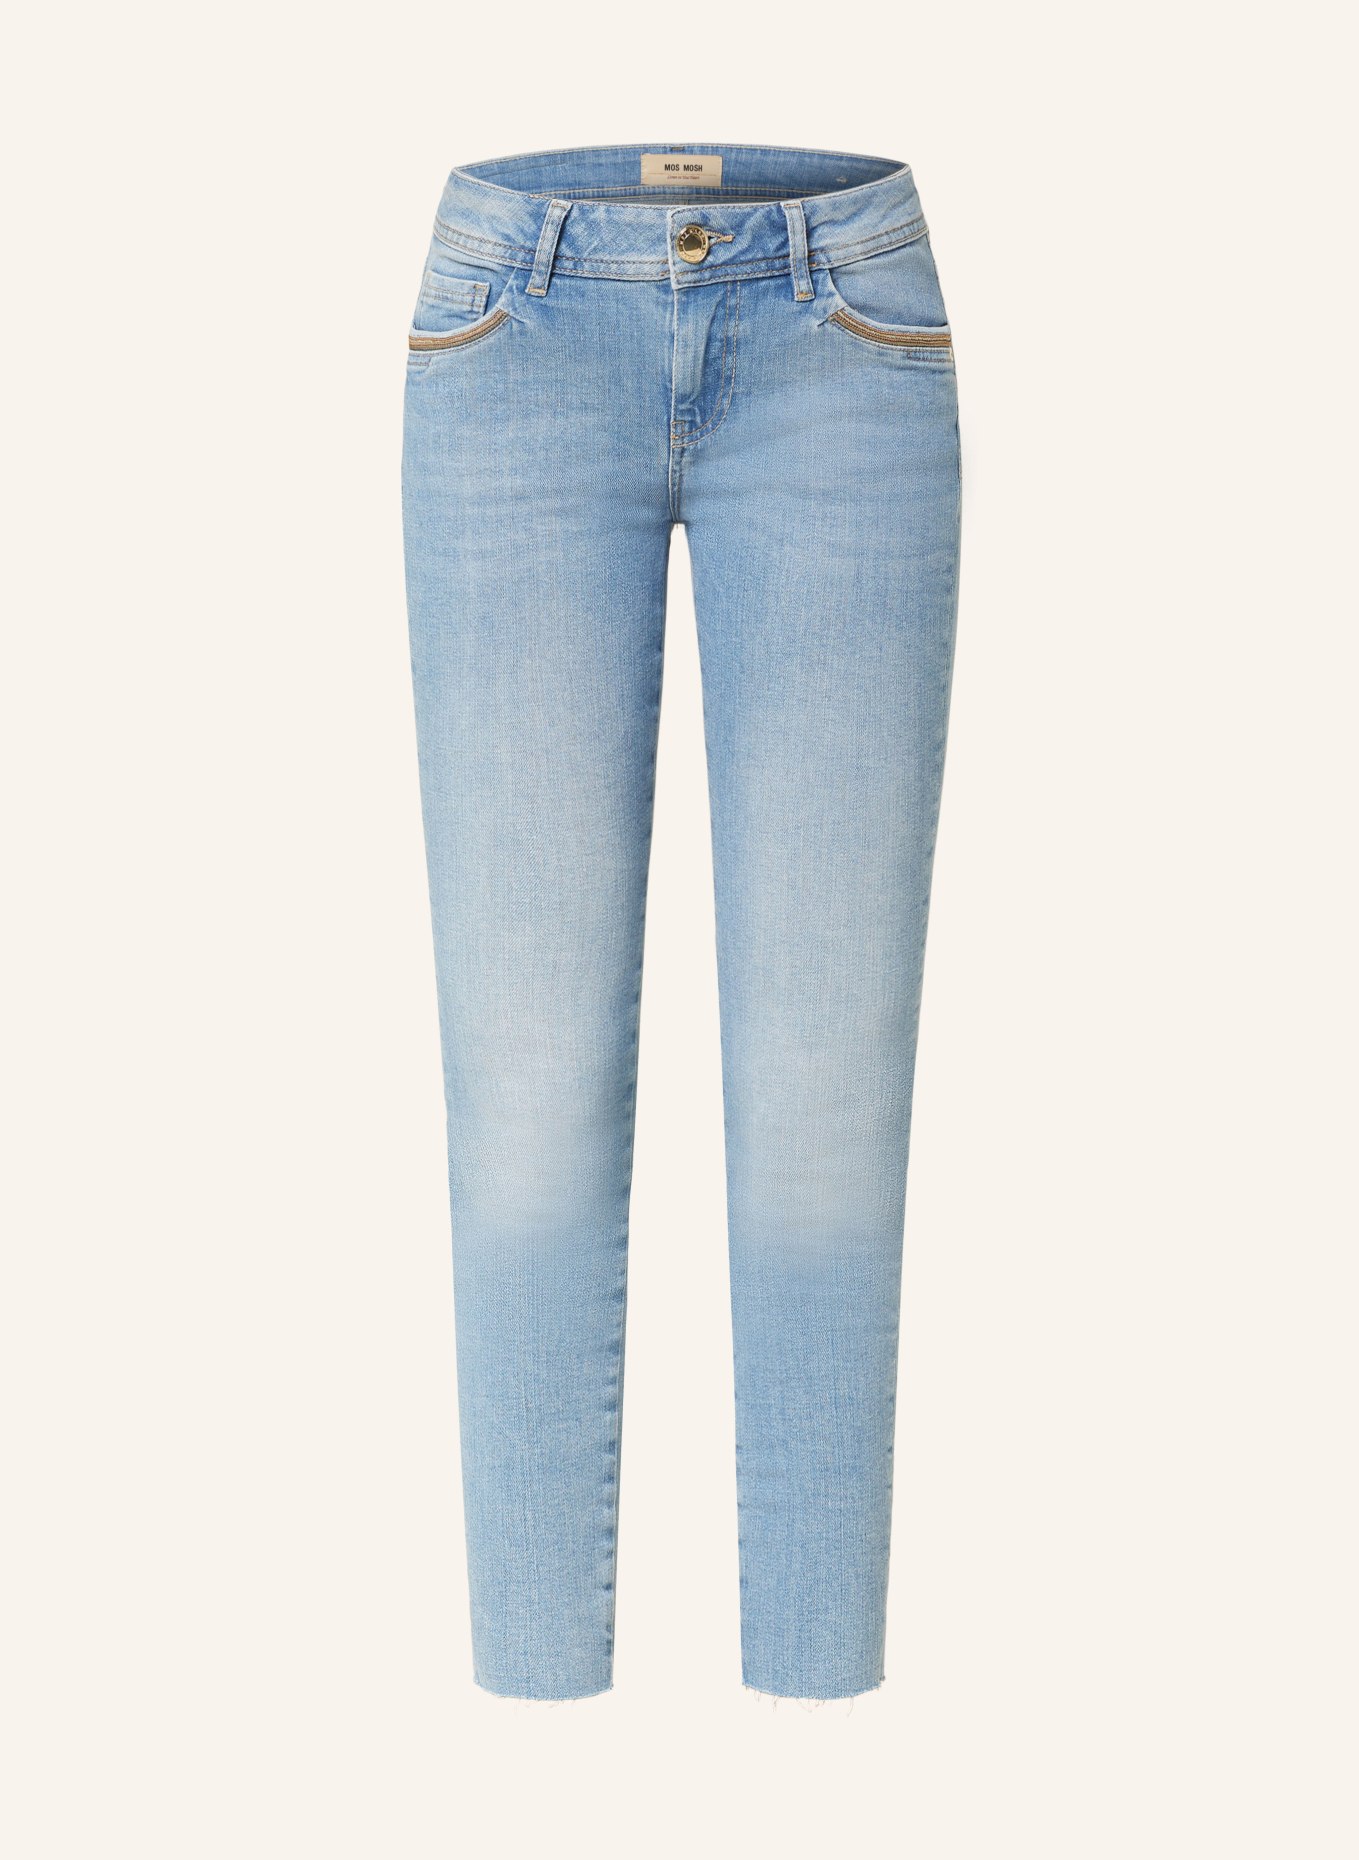 MOS MOSH Skinny Jeans MMSUMNER, Farbe: 406 LIGHT BLUE (Bild 1)